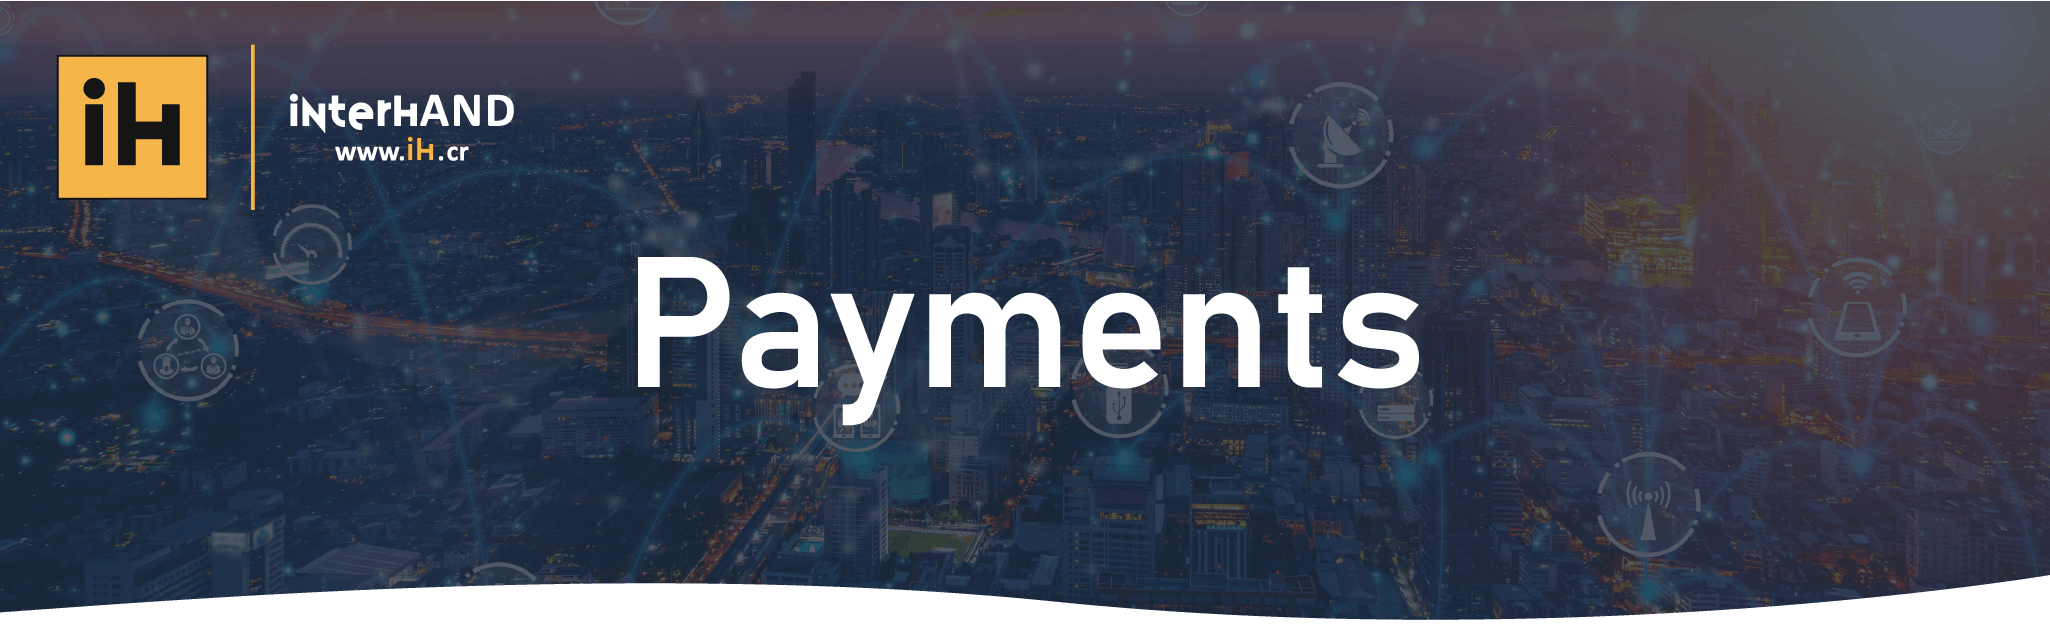 Payments / InterHAND